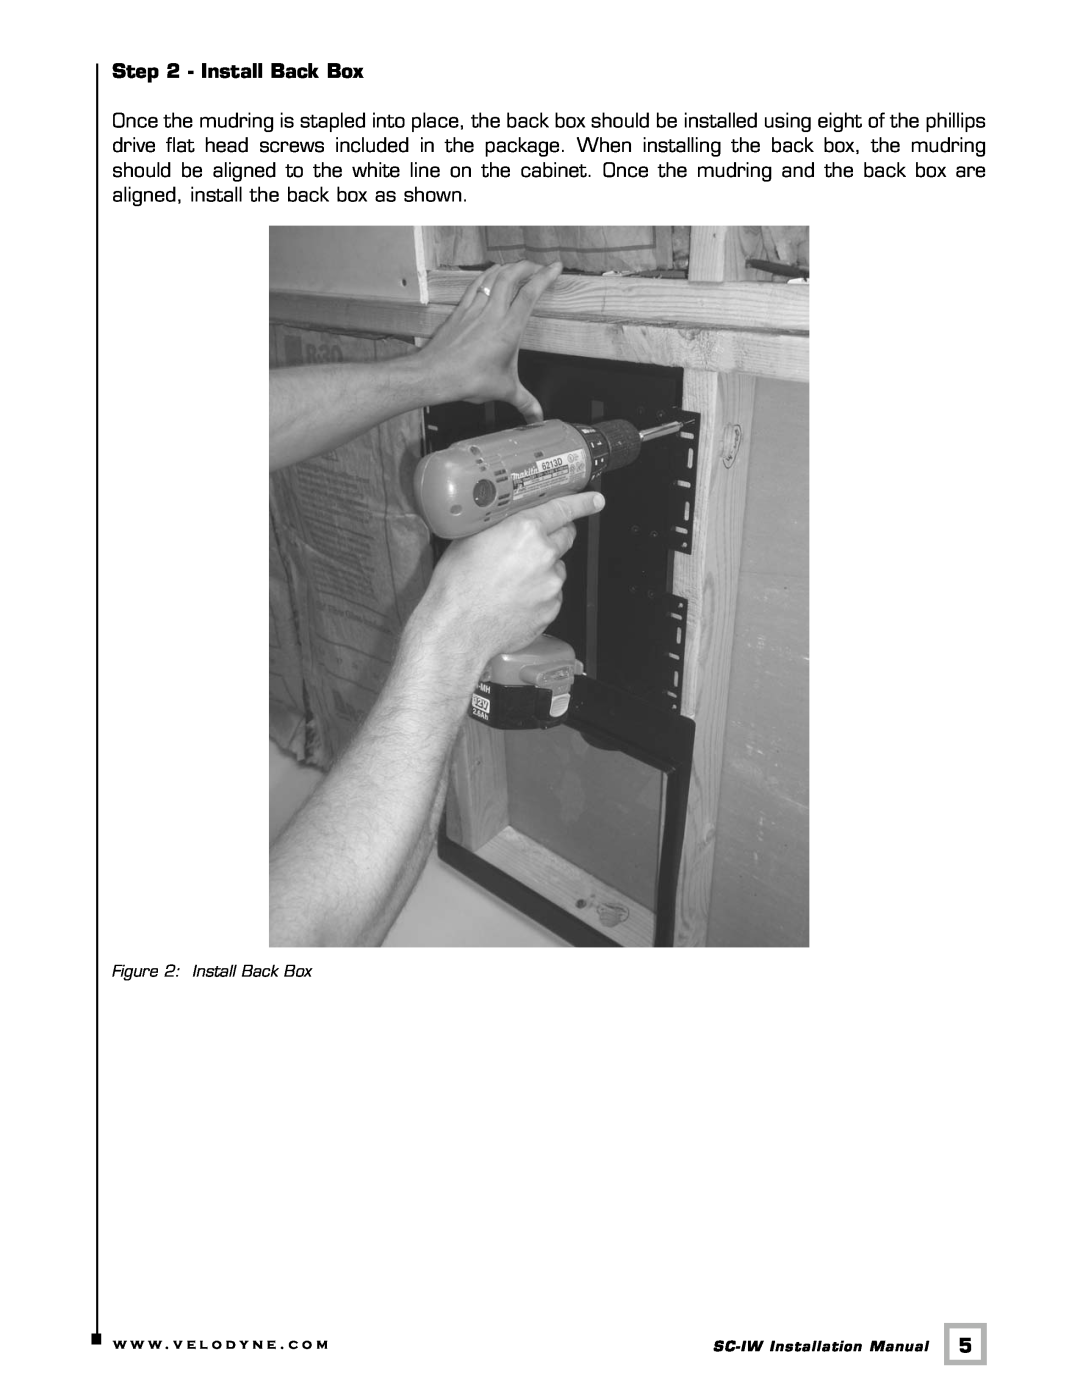 Velodyne Acoustics SC-IW installation manual Install Back Box 